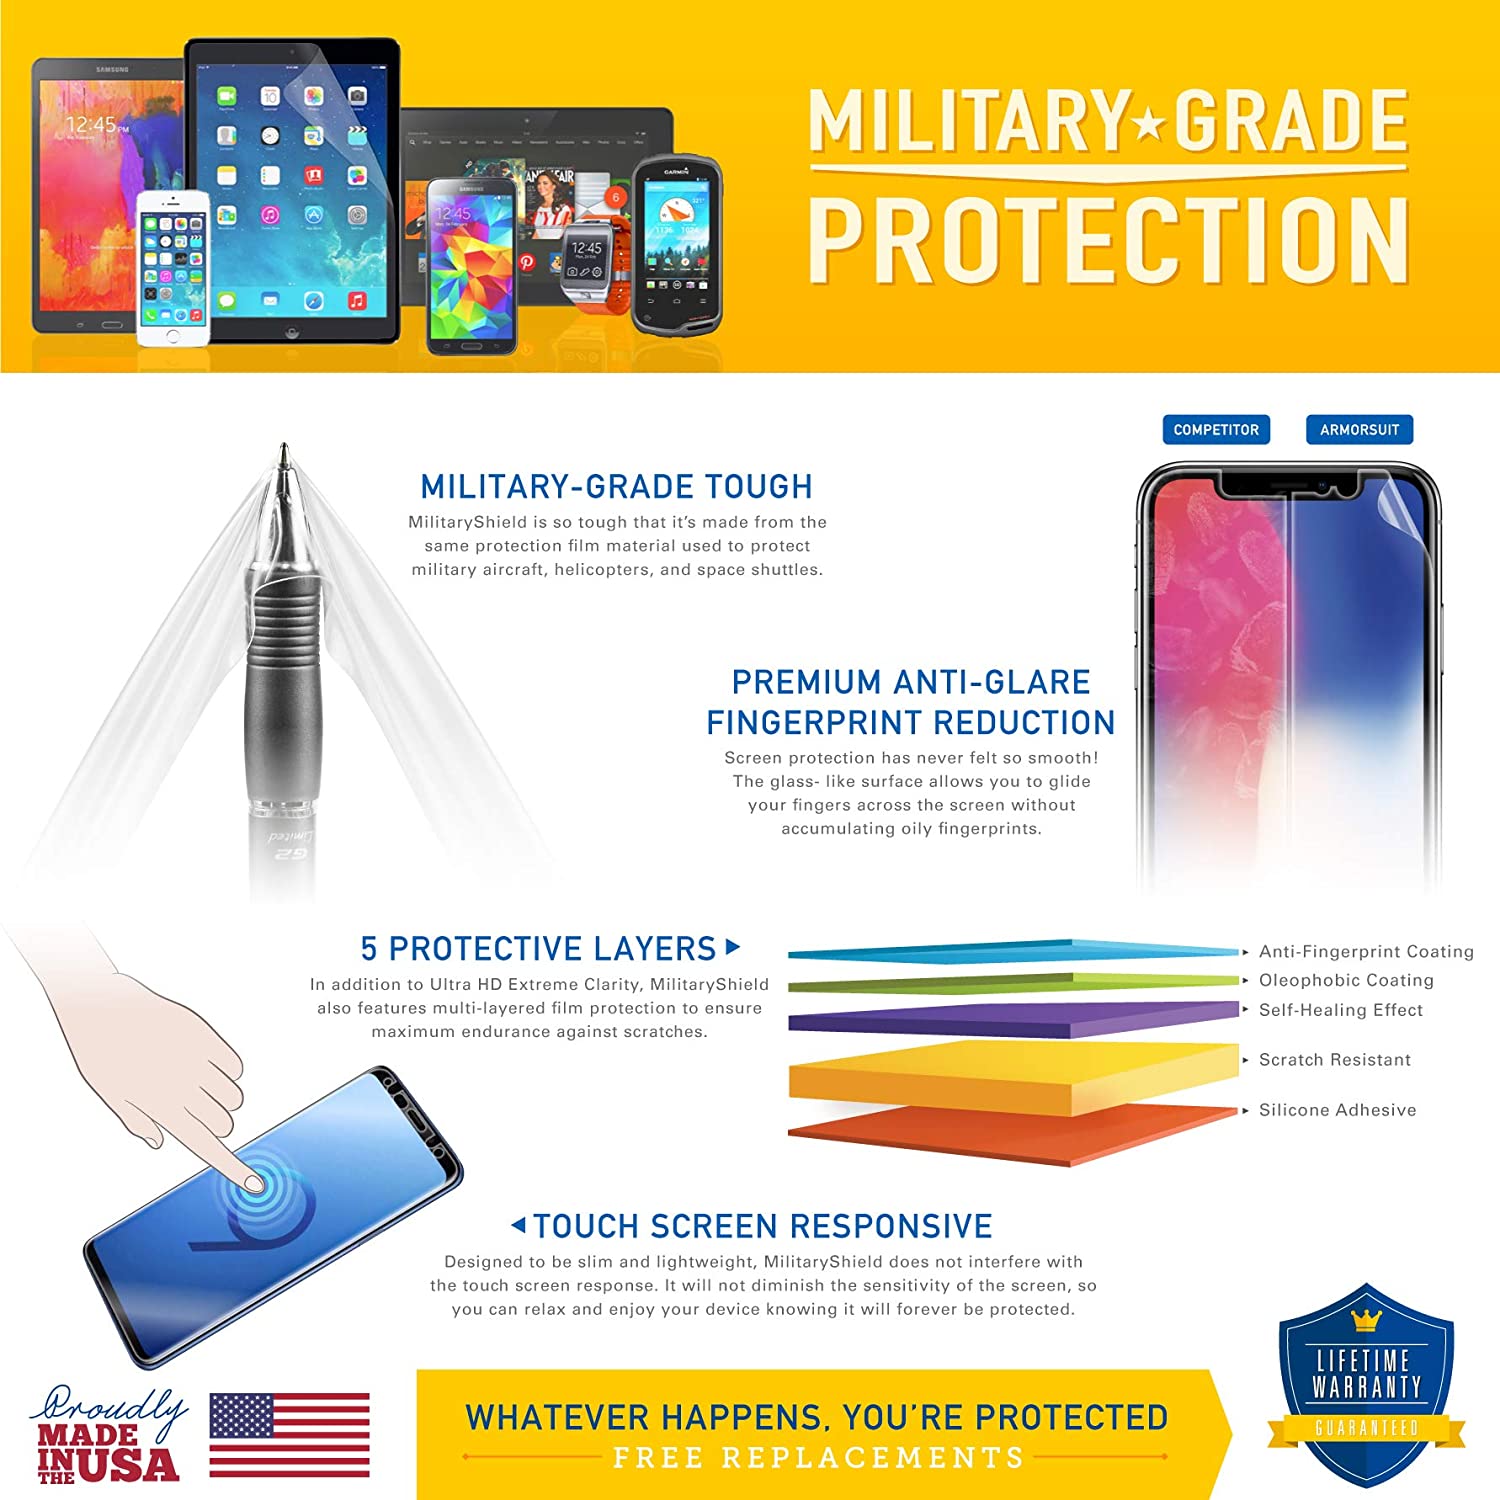 [2 Pack] Motorola Moto G4 (4th Gen) Matte Screen Protector